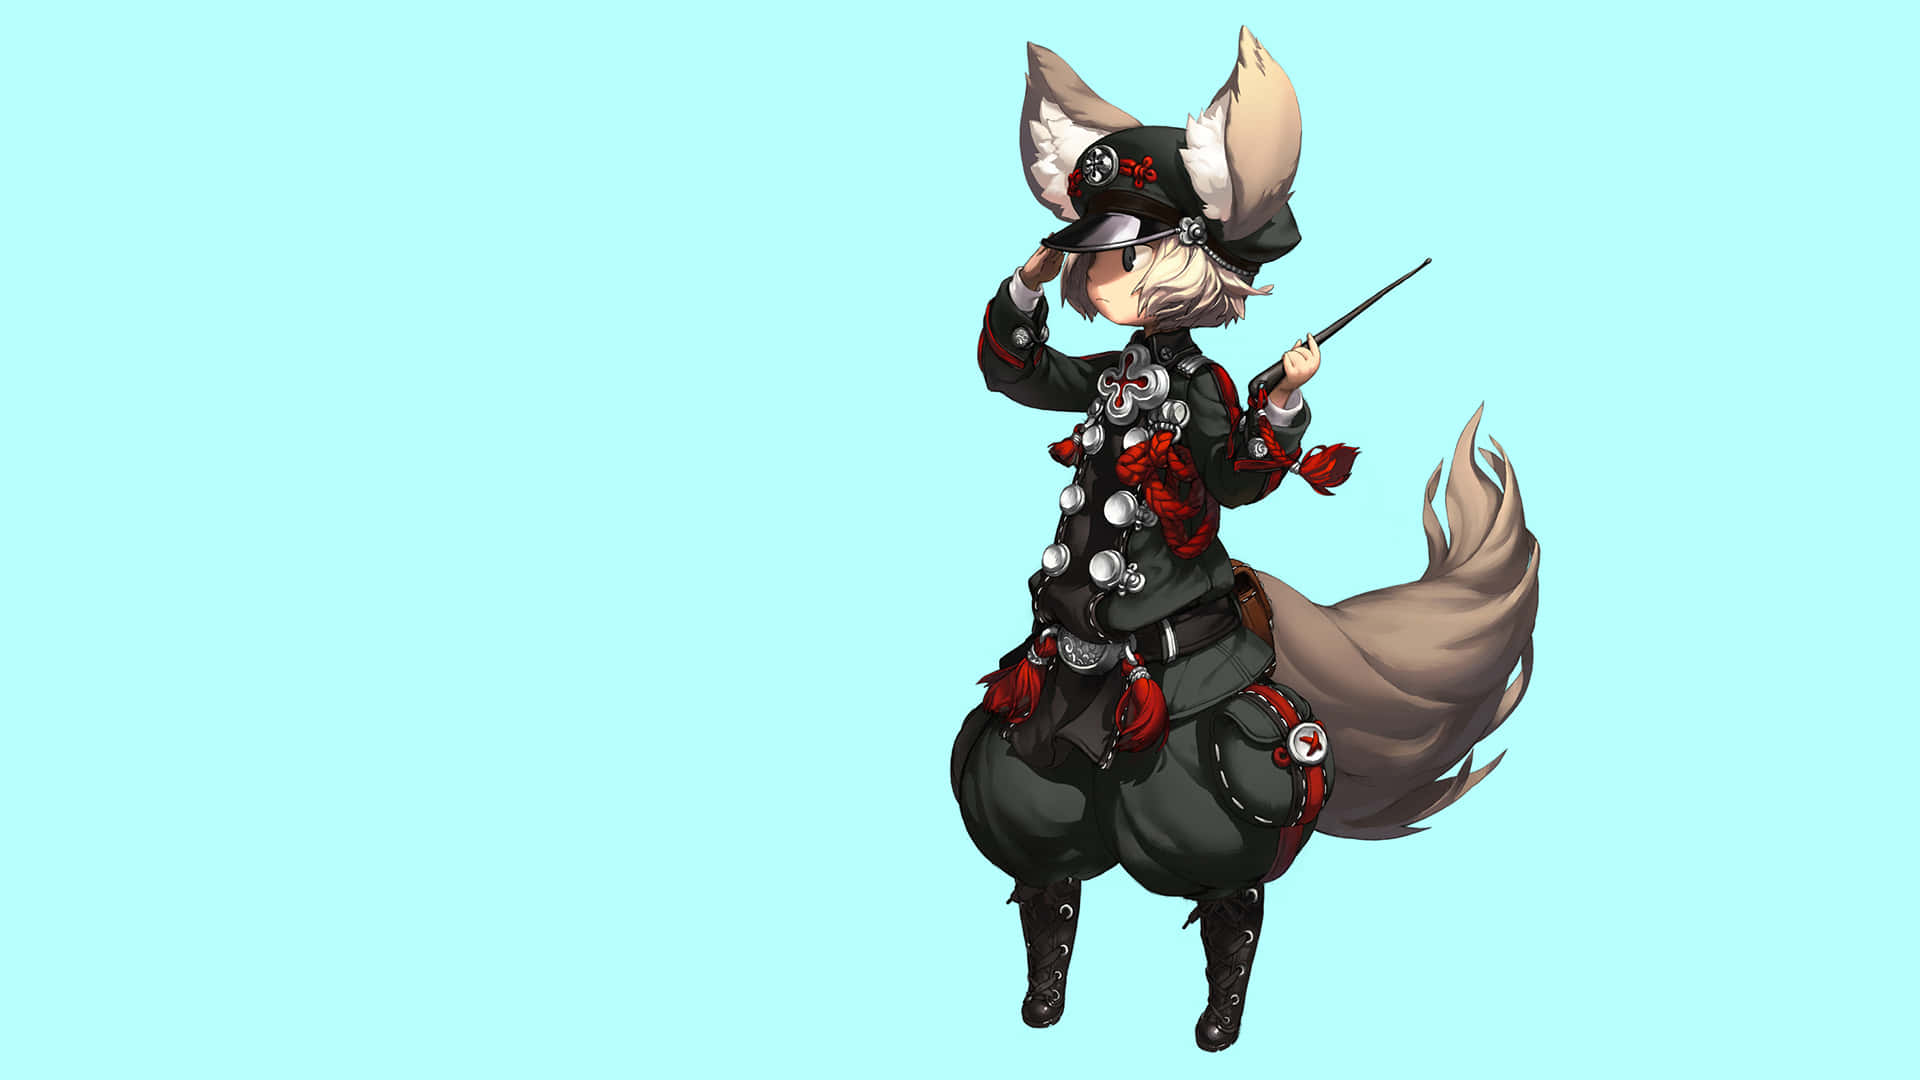 A Fox In A Costume With A Gun Wallpaper